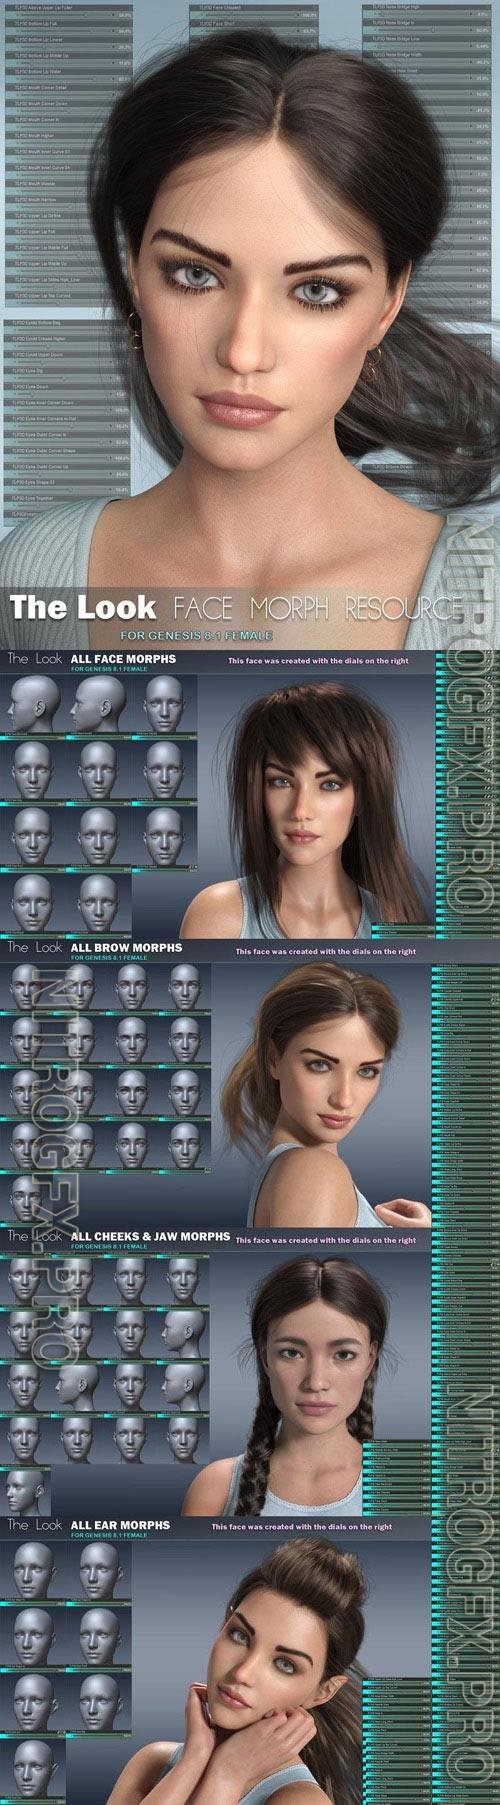 The Look Face Morph Resource for Genesis 8.1 Females